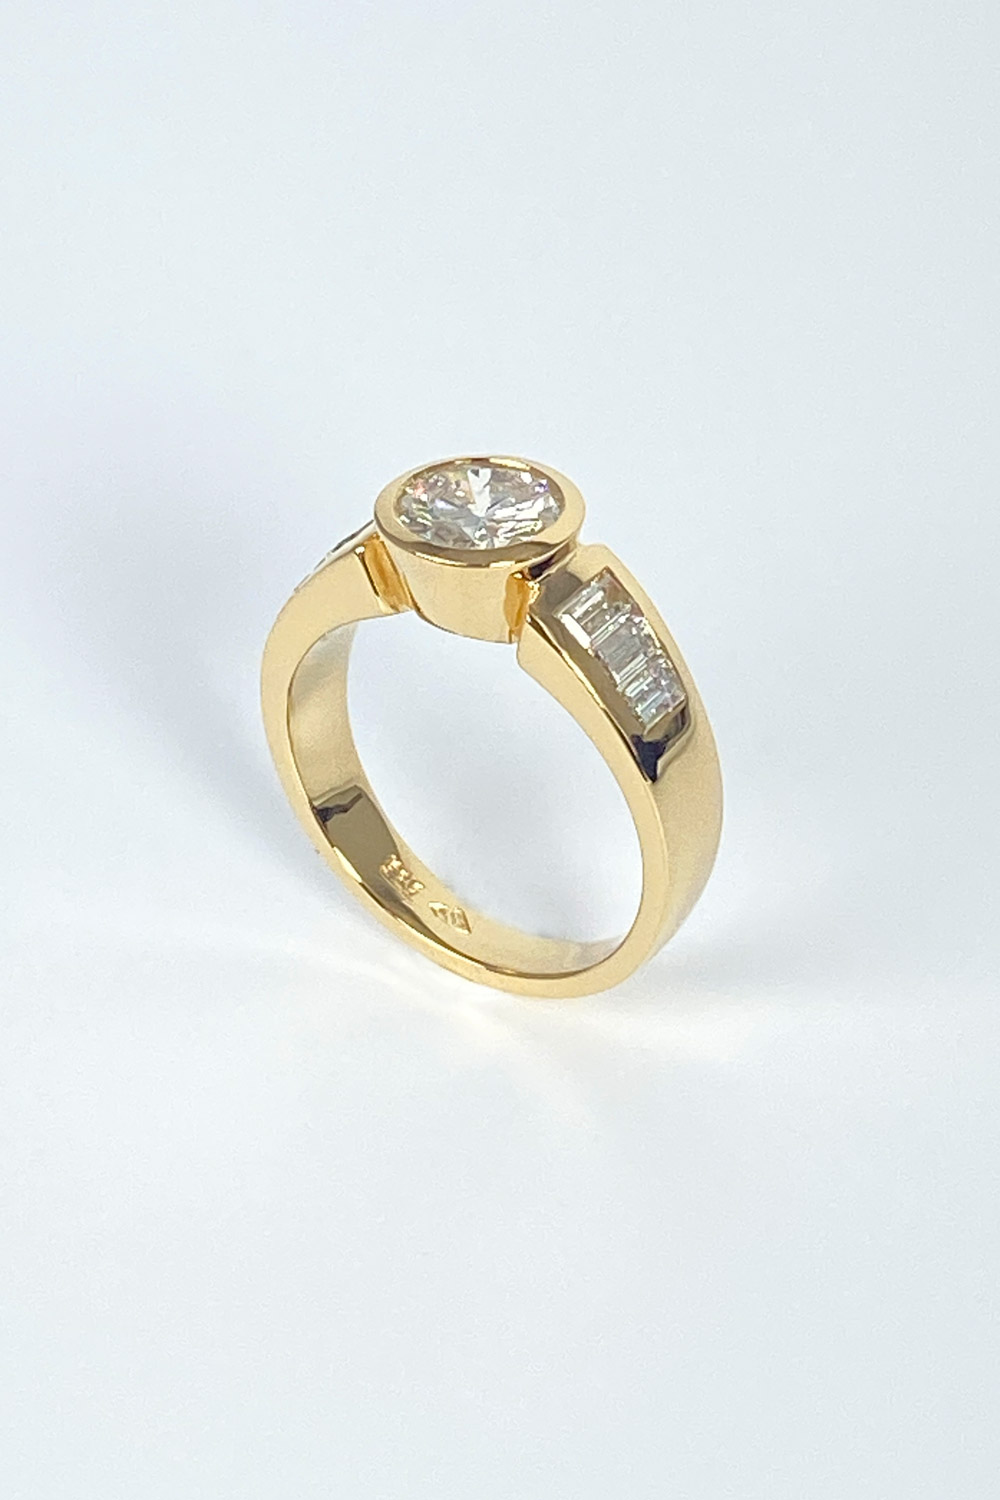 https://www.schuett-edelsteine.de/wp-content/uploads/2021/08/robert-schuett-witwe-edelsteine-schmuck-gold-bergkristall-quartz-anhanger-collier-unikatschmuck-individuell-1.jpg